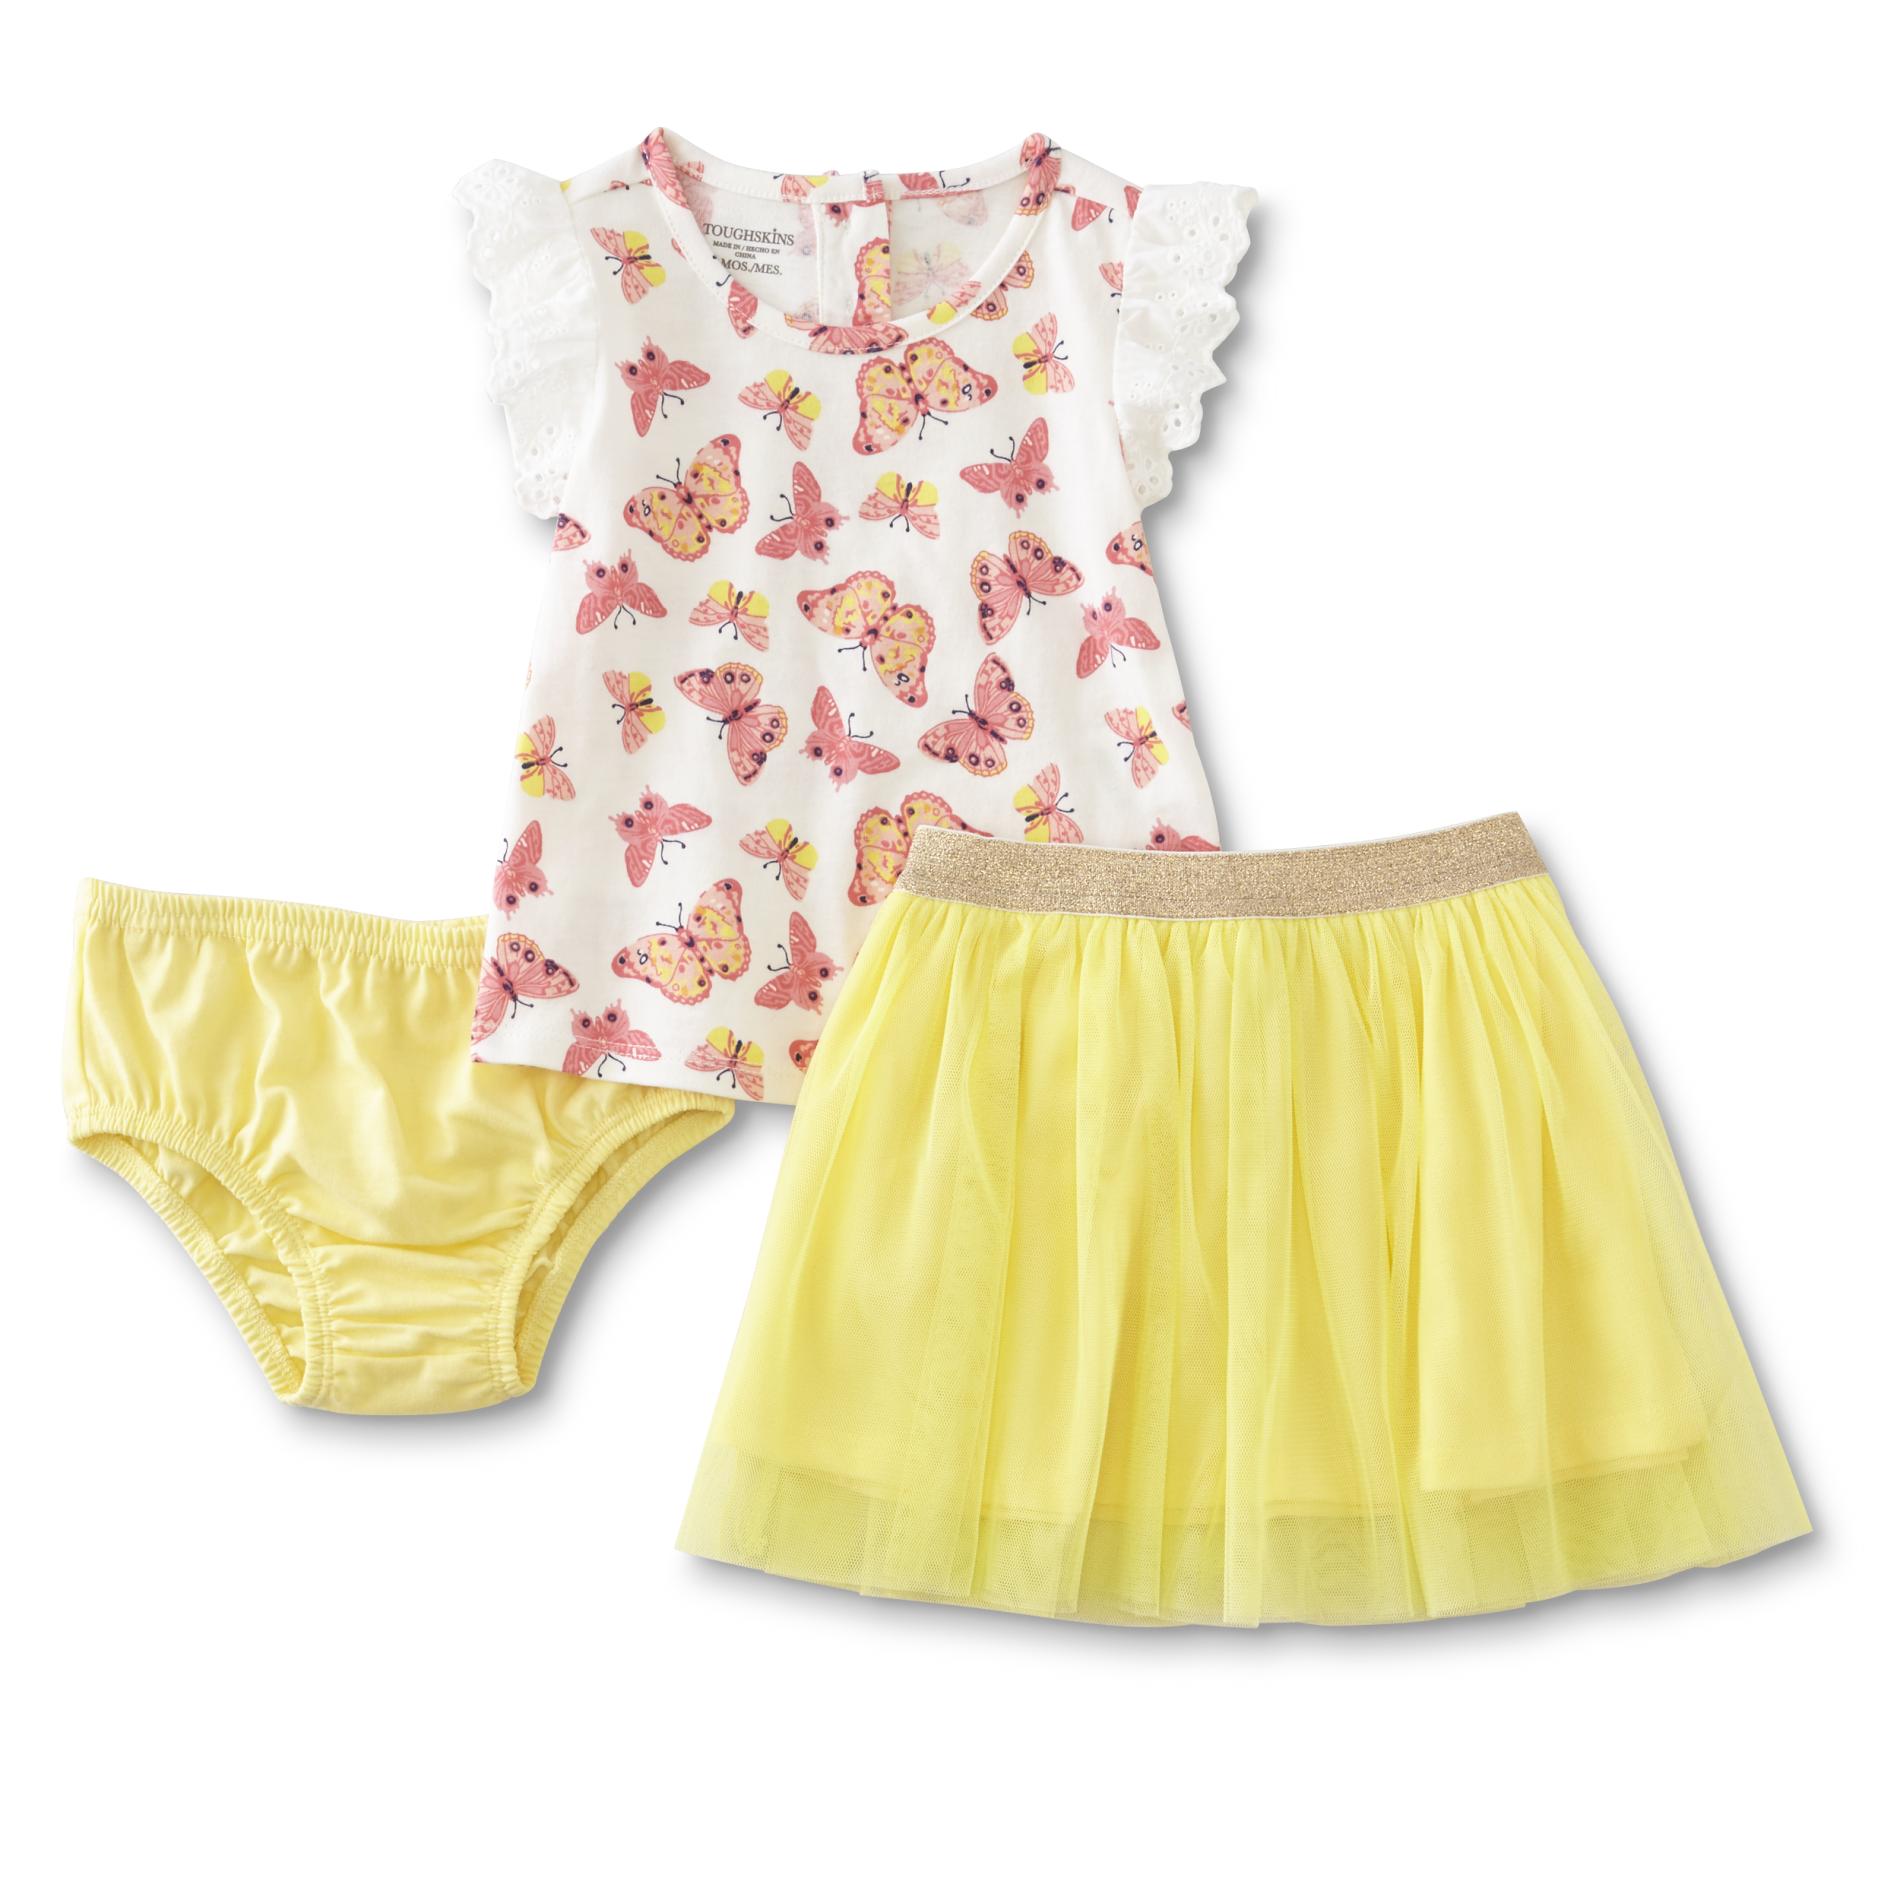 Toughskins Infant Girls' T-Shirt, Skirt & Diaper Cover - Butterfly